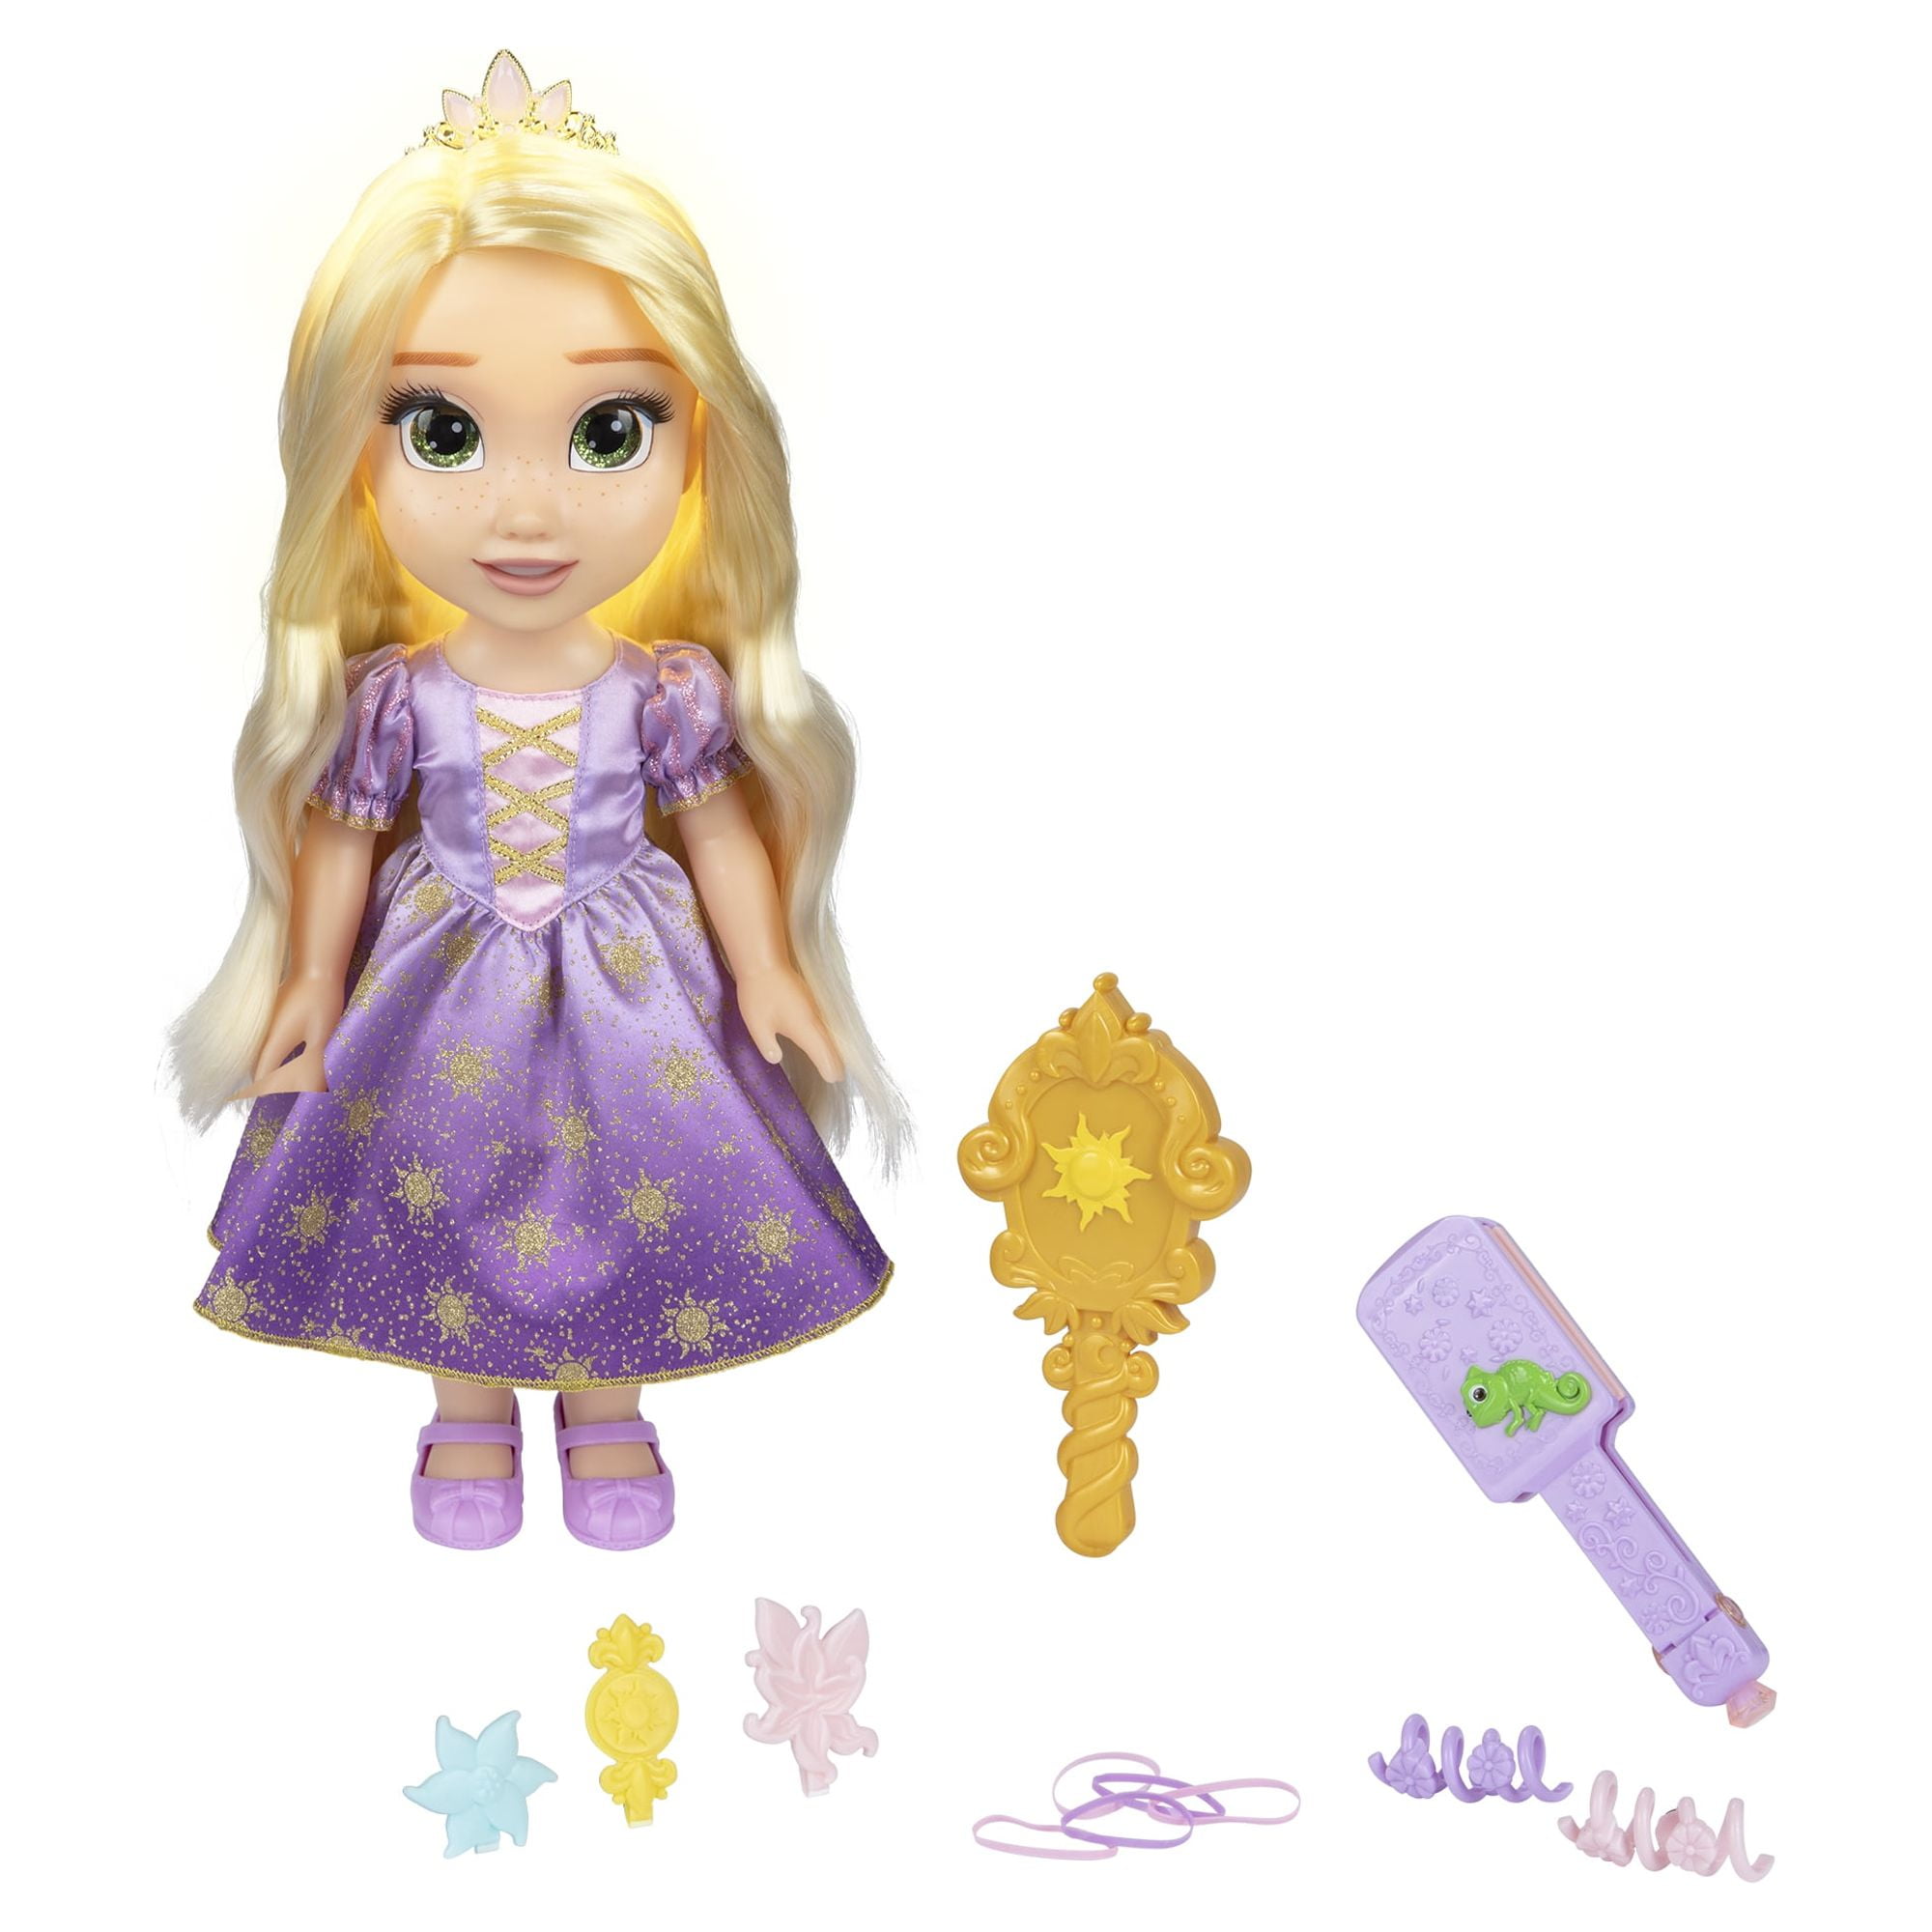 Magic Princess: Dress Up on the App Store